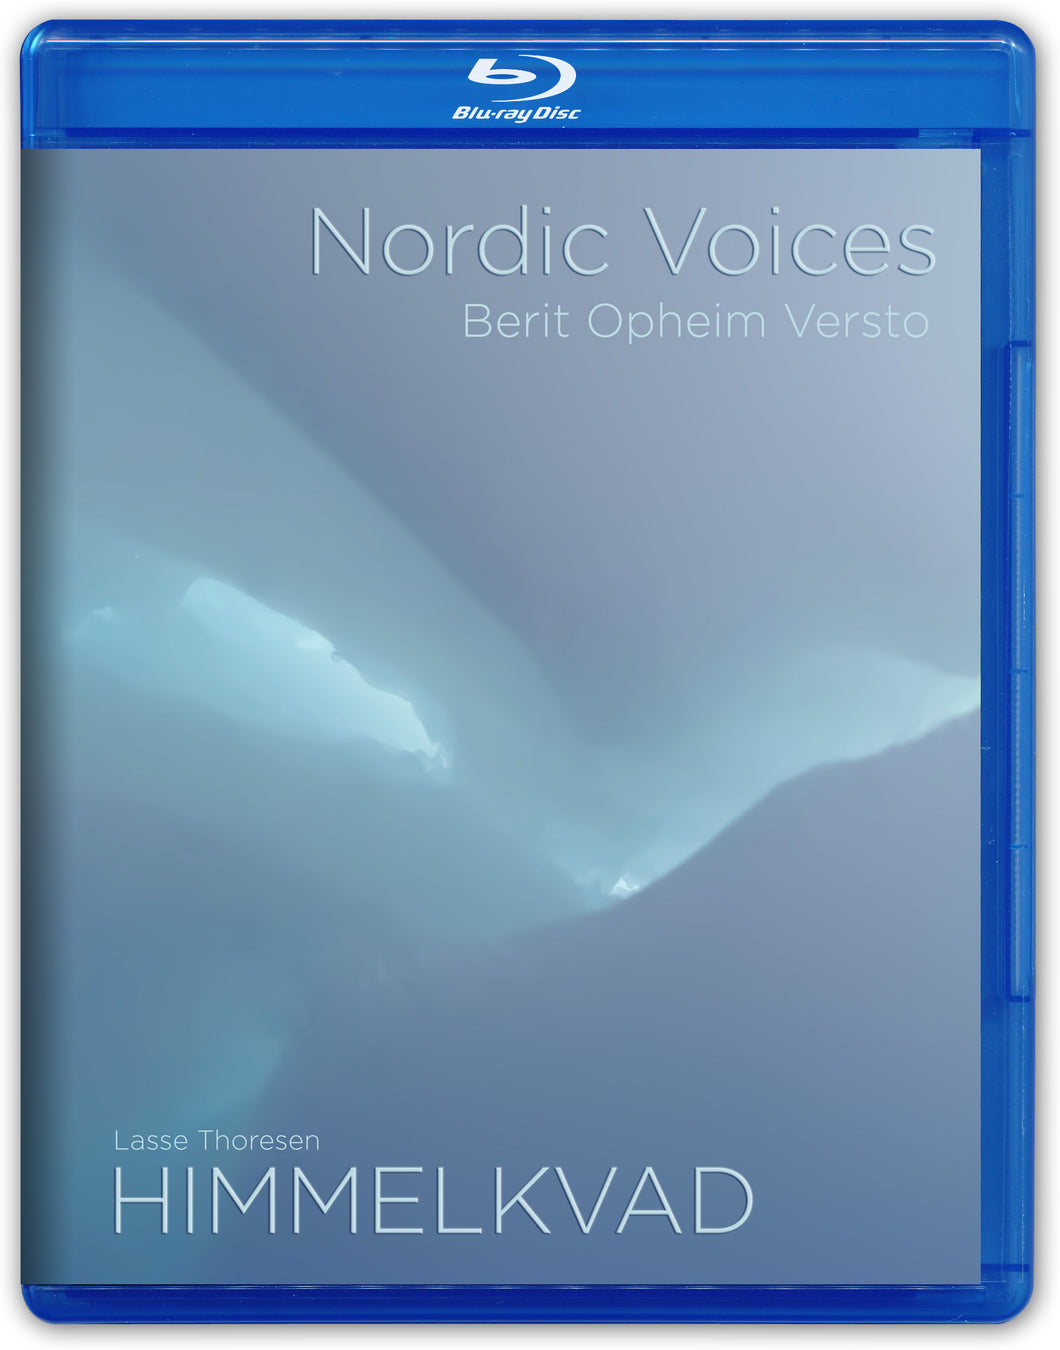 Lasse Thoresen: HIMMELKVAD - Nordic Voices, Berit Opheim